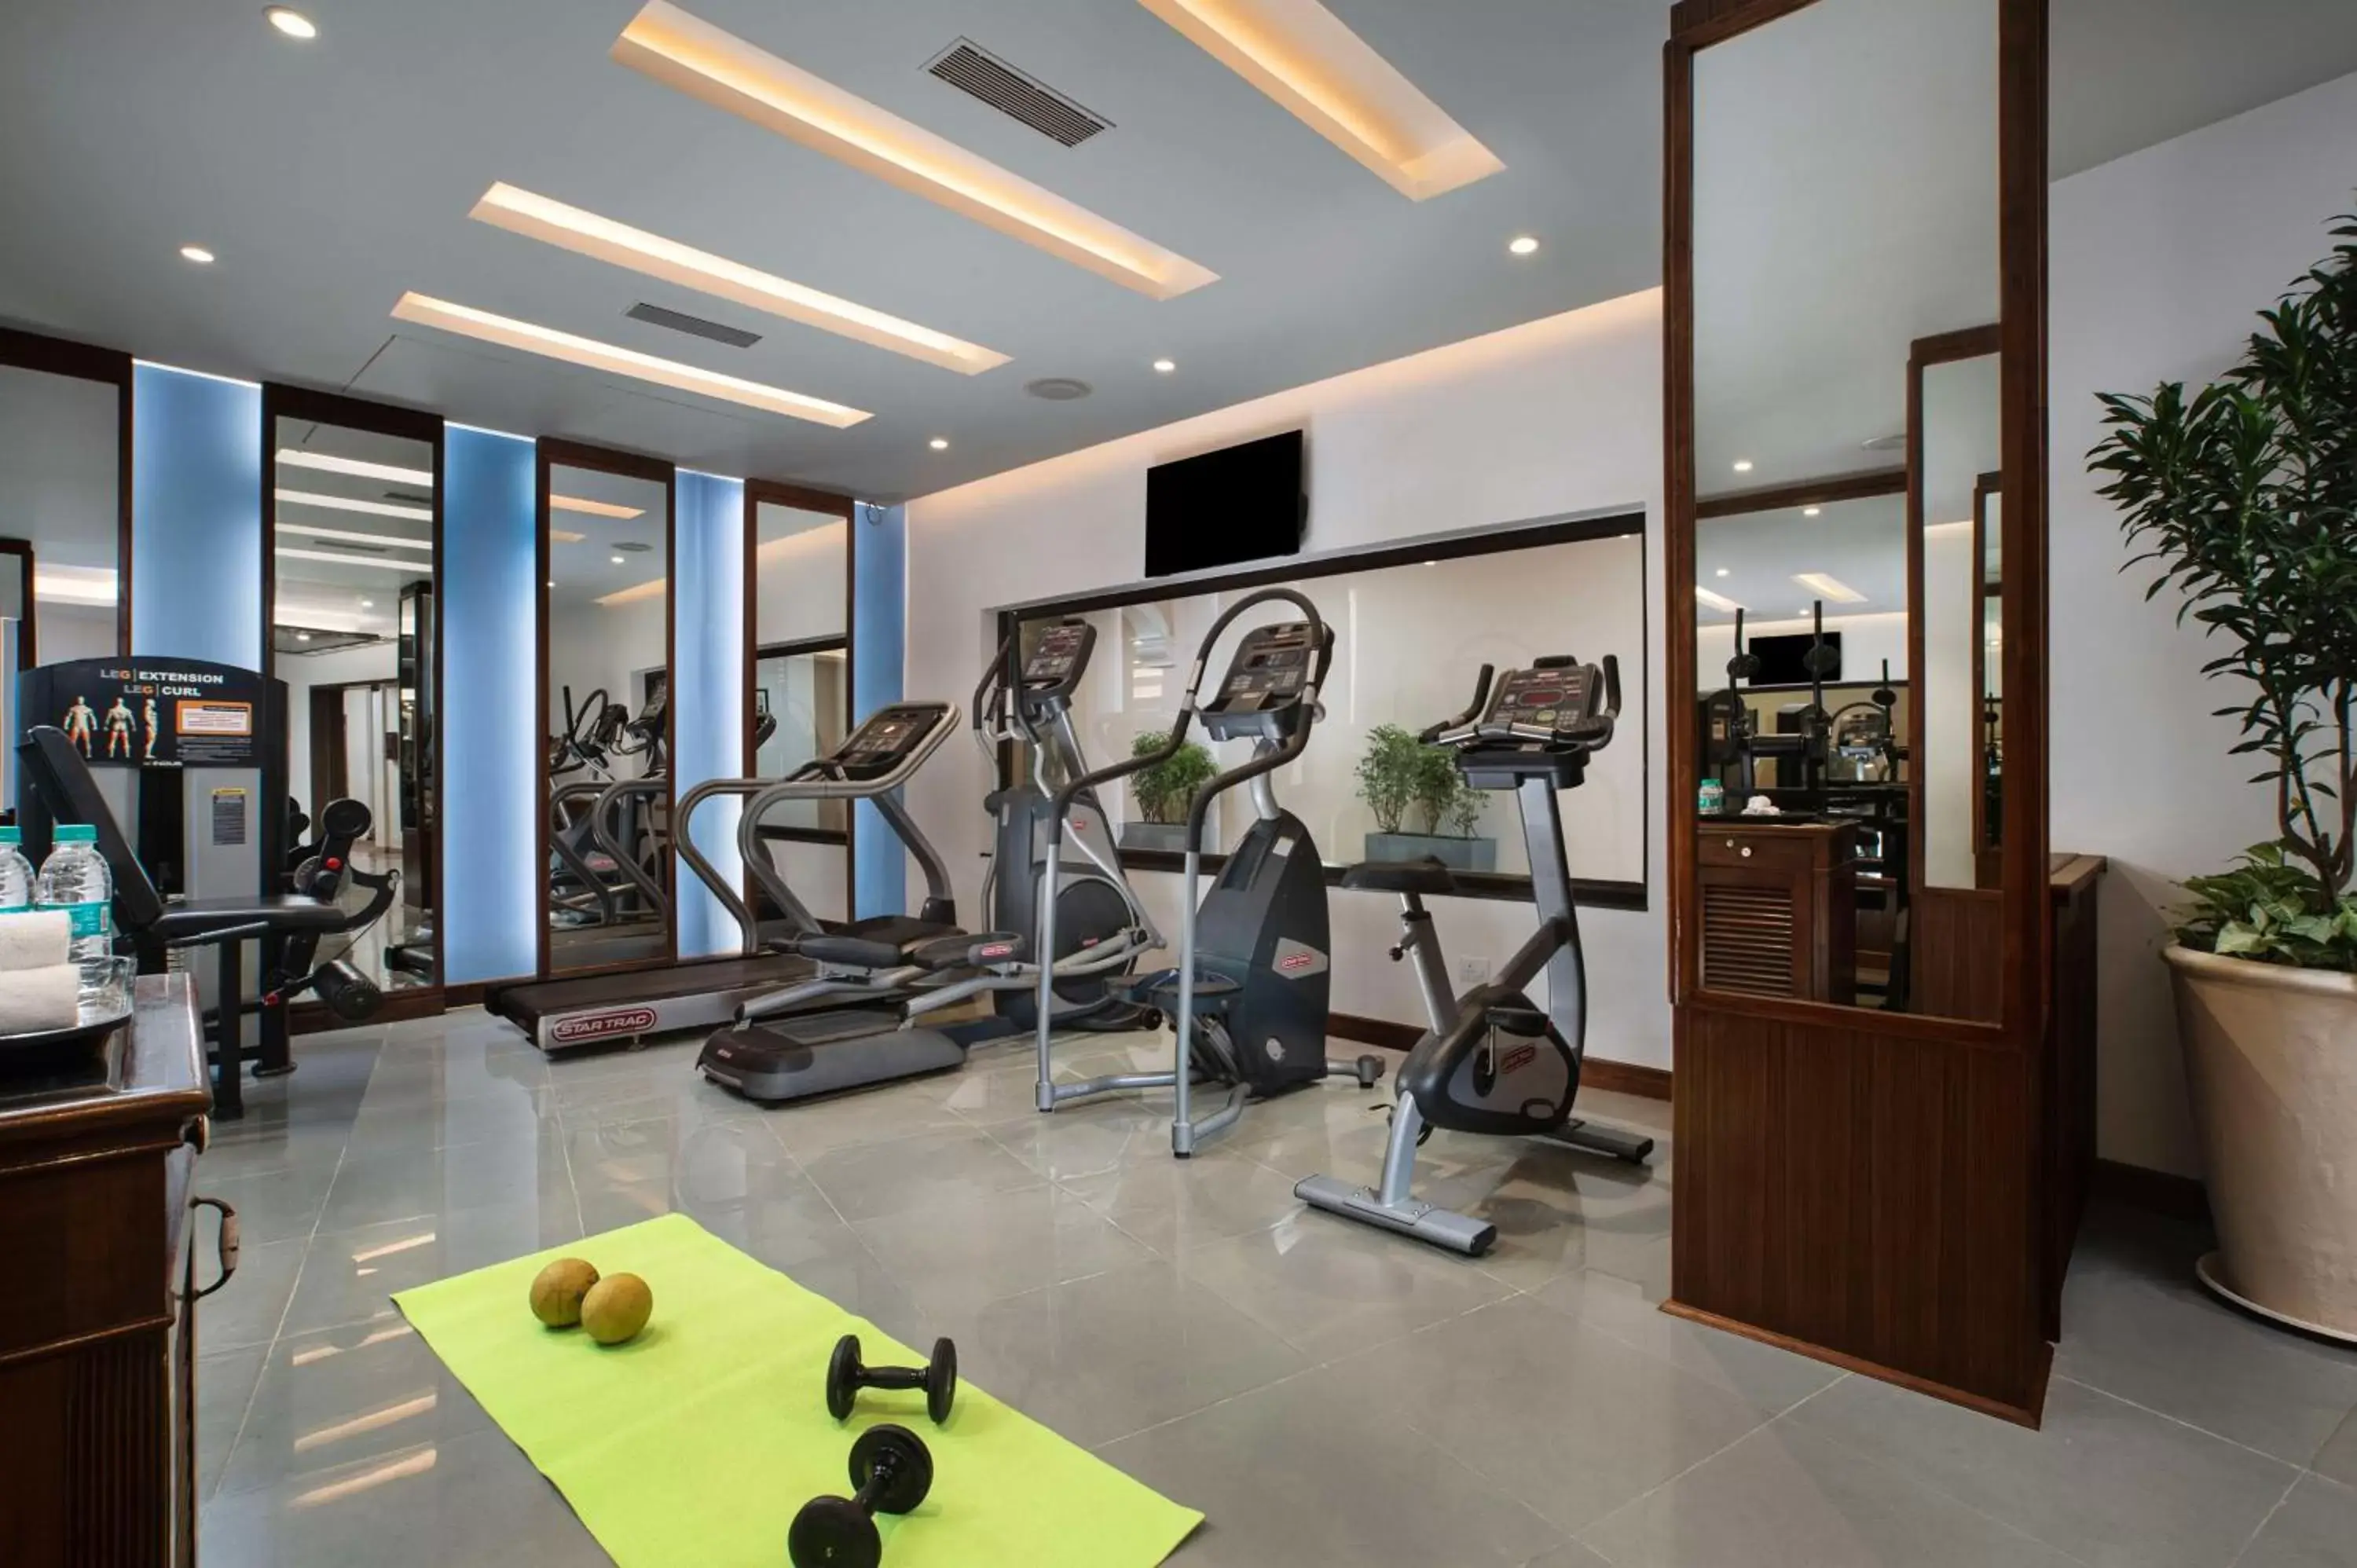 Fitness centre/facilities, Fitness Center/Facilities in Radisson Blu Resort, Goa